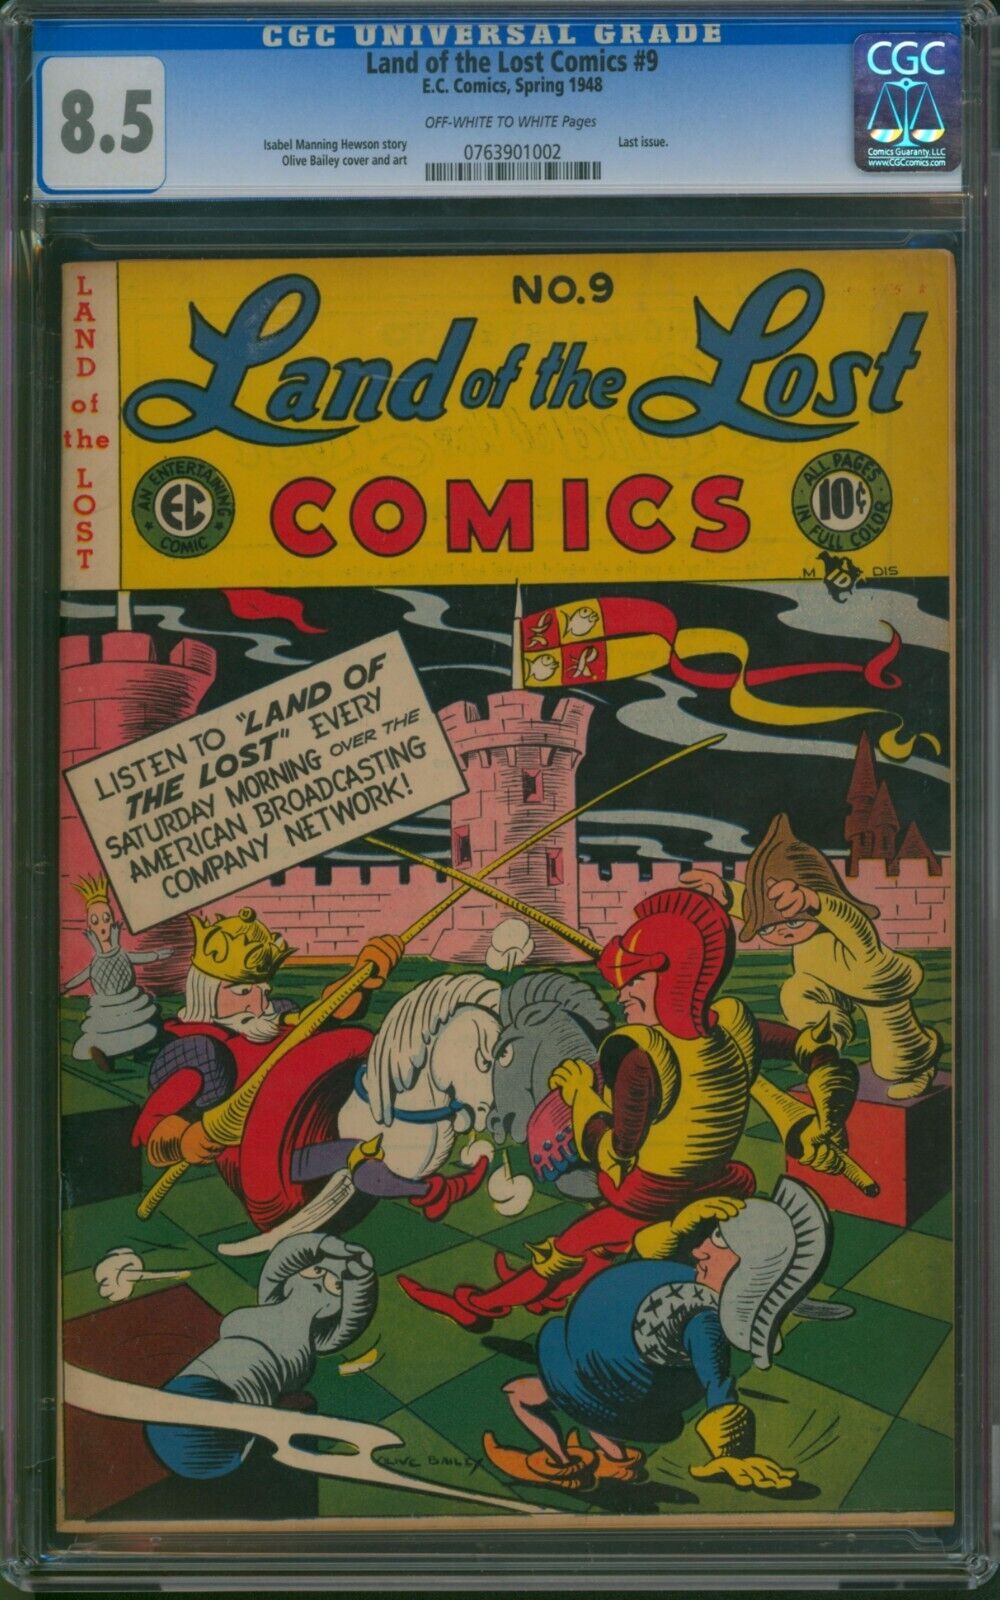 LAND OF THE LOST COMICS #9 (1948) ⭐ CGC 8.5 ⭐ Rare Golden Age EC Comic